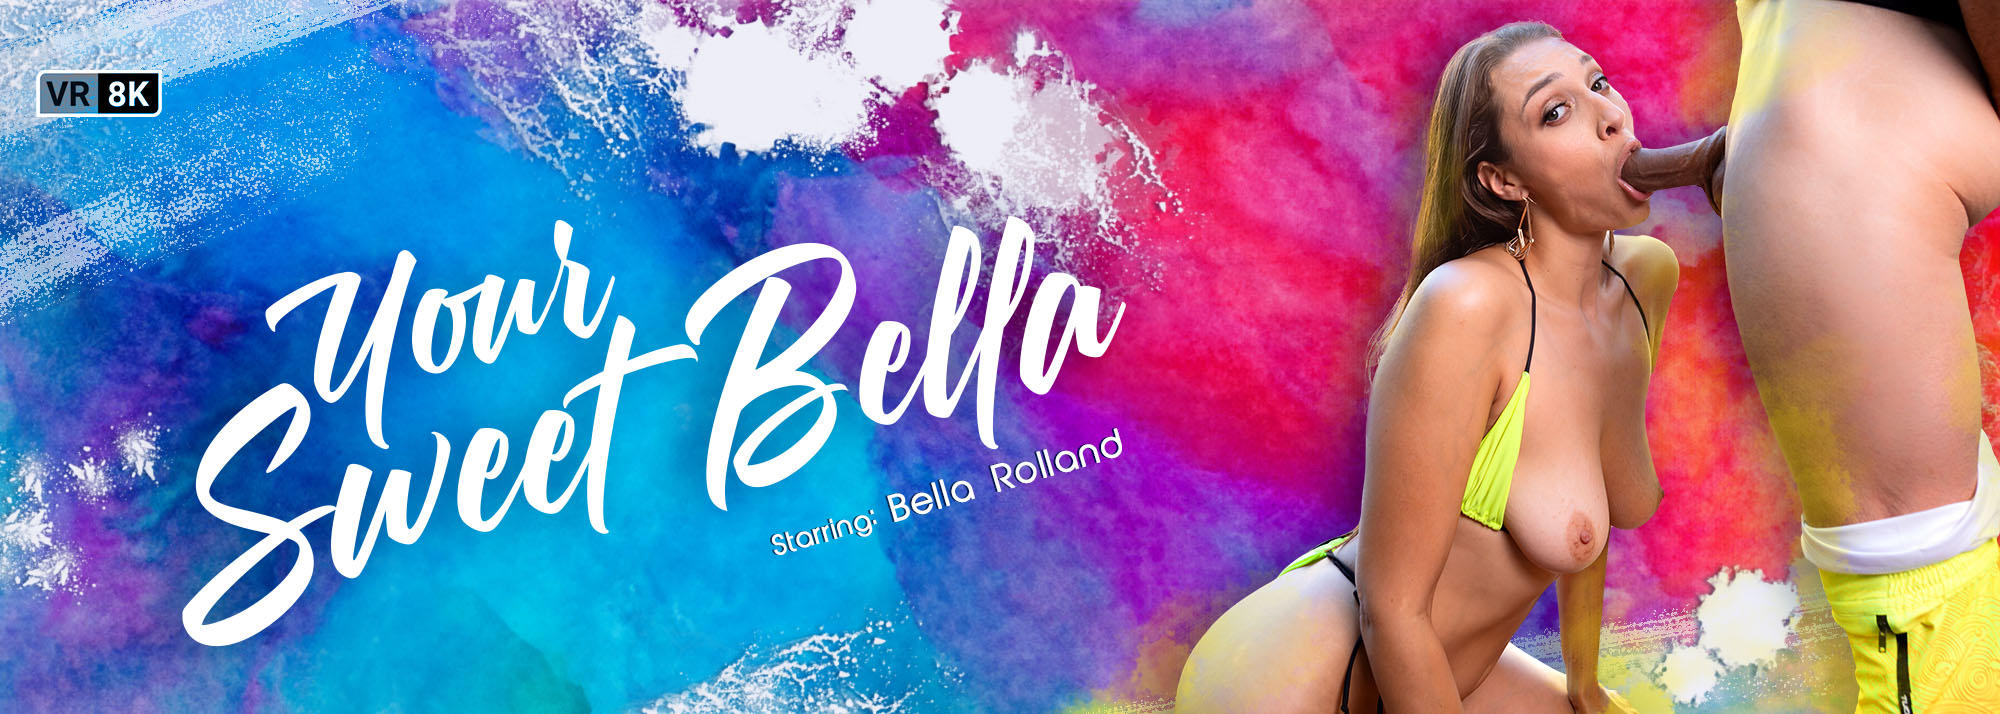 Your Sweet Bella - VR Porn Video, Starring: Bella Rolland